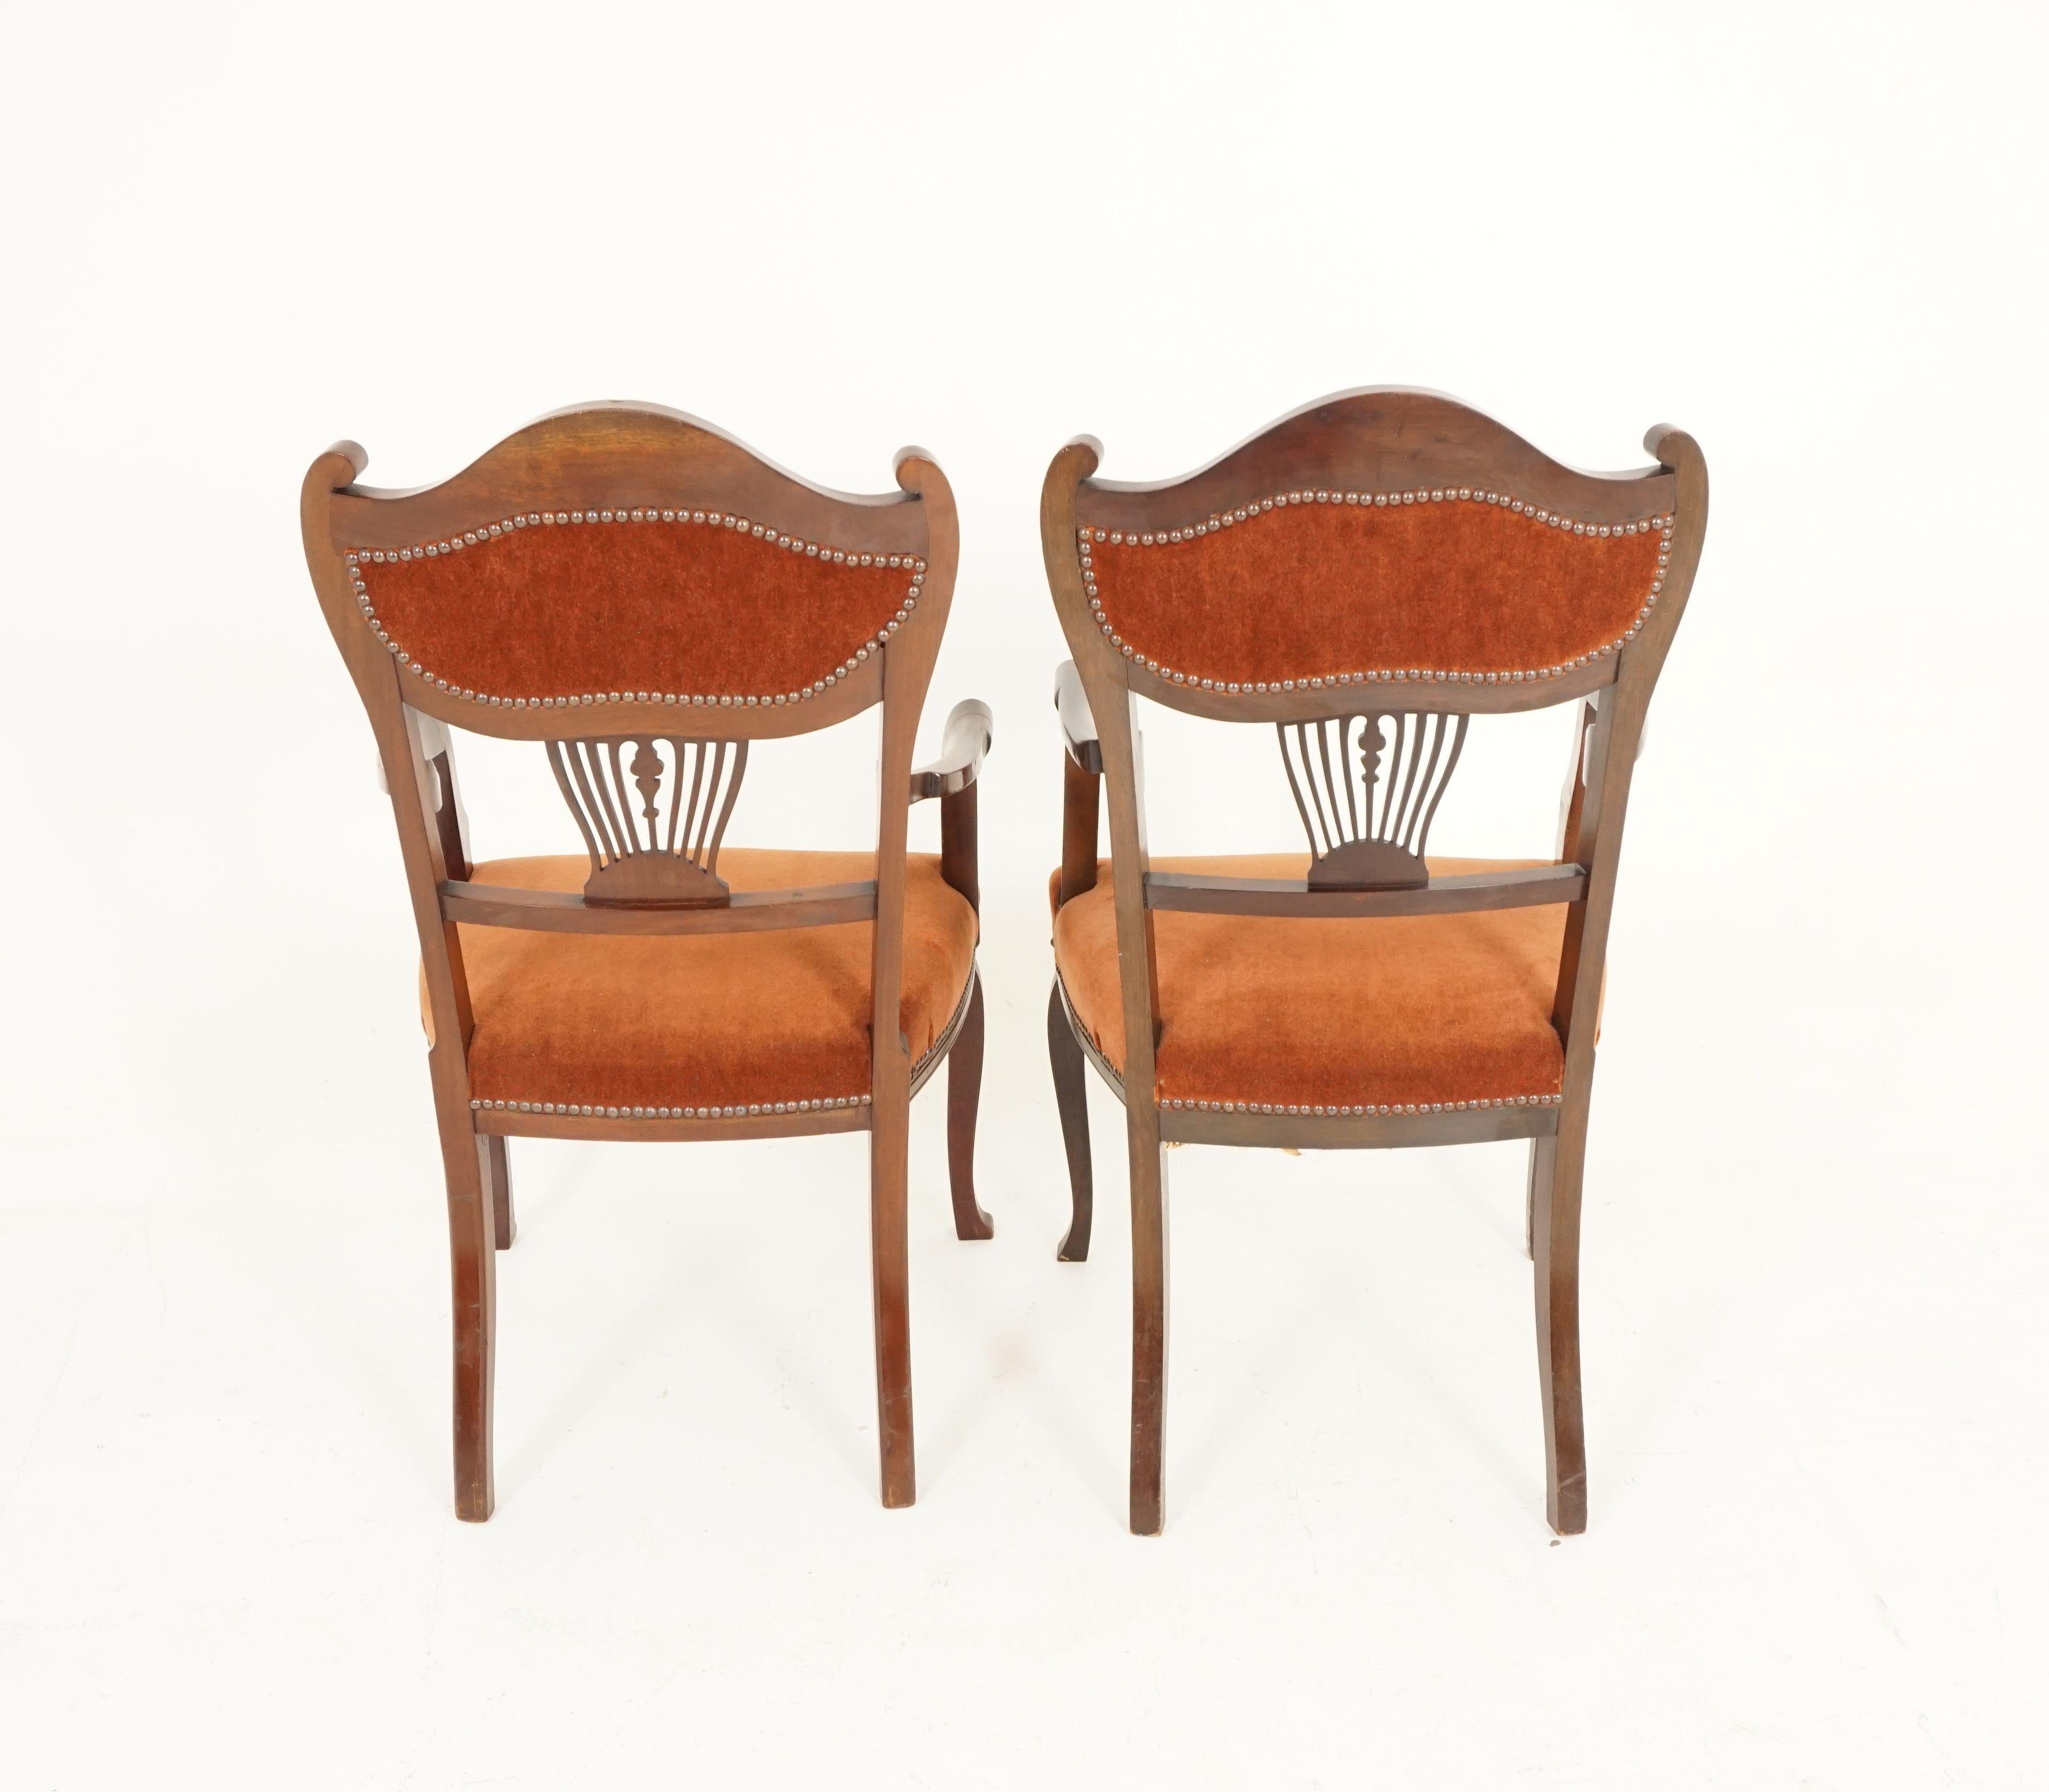 Antique Walnut Arm Chairs, Edwardian, Art Nouveau, Upholstered Seat, B2344 4